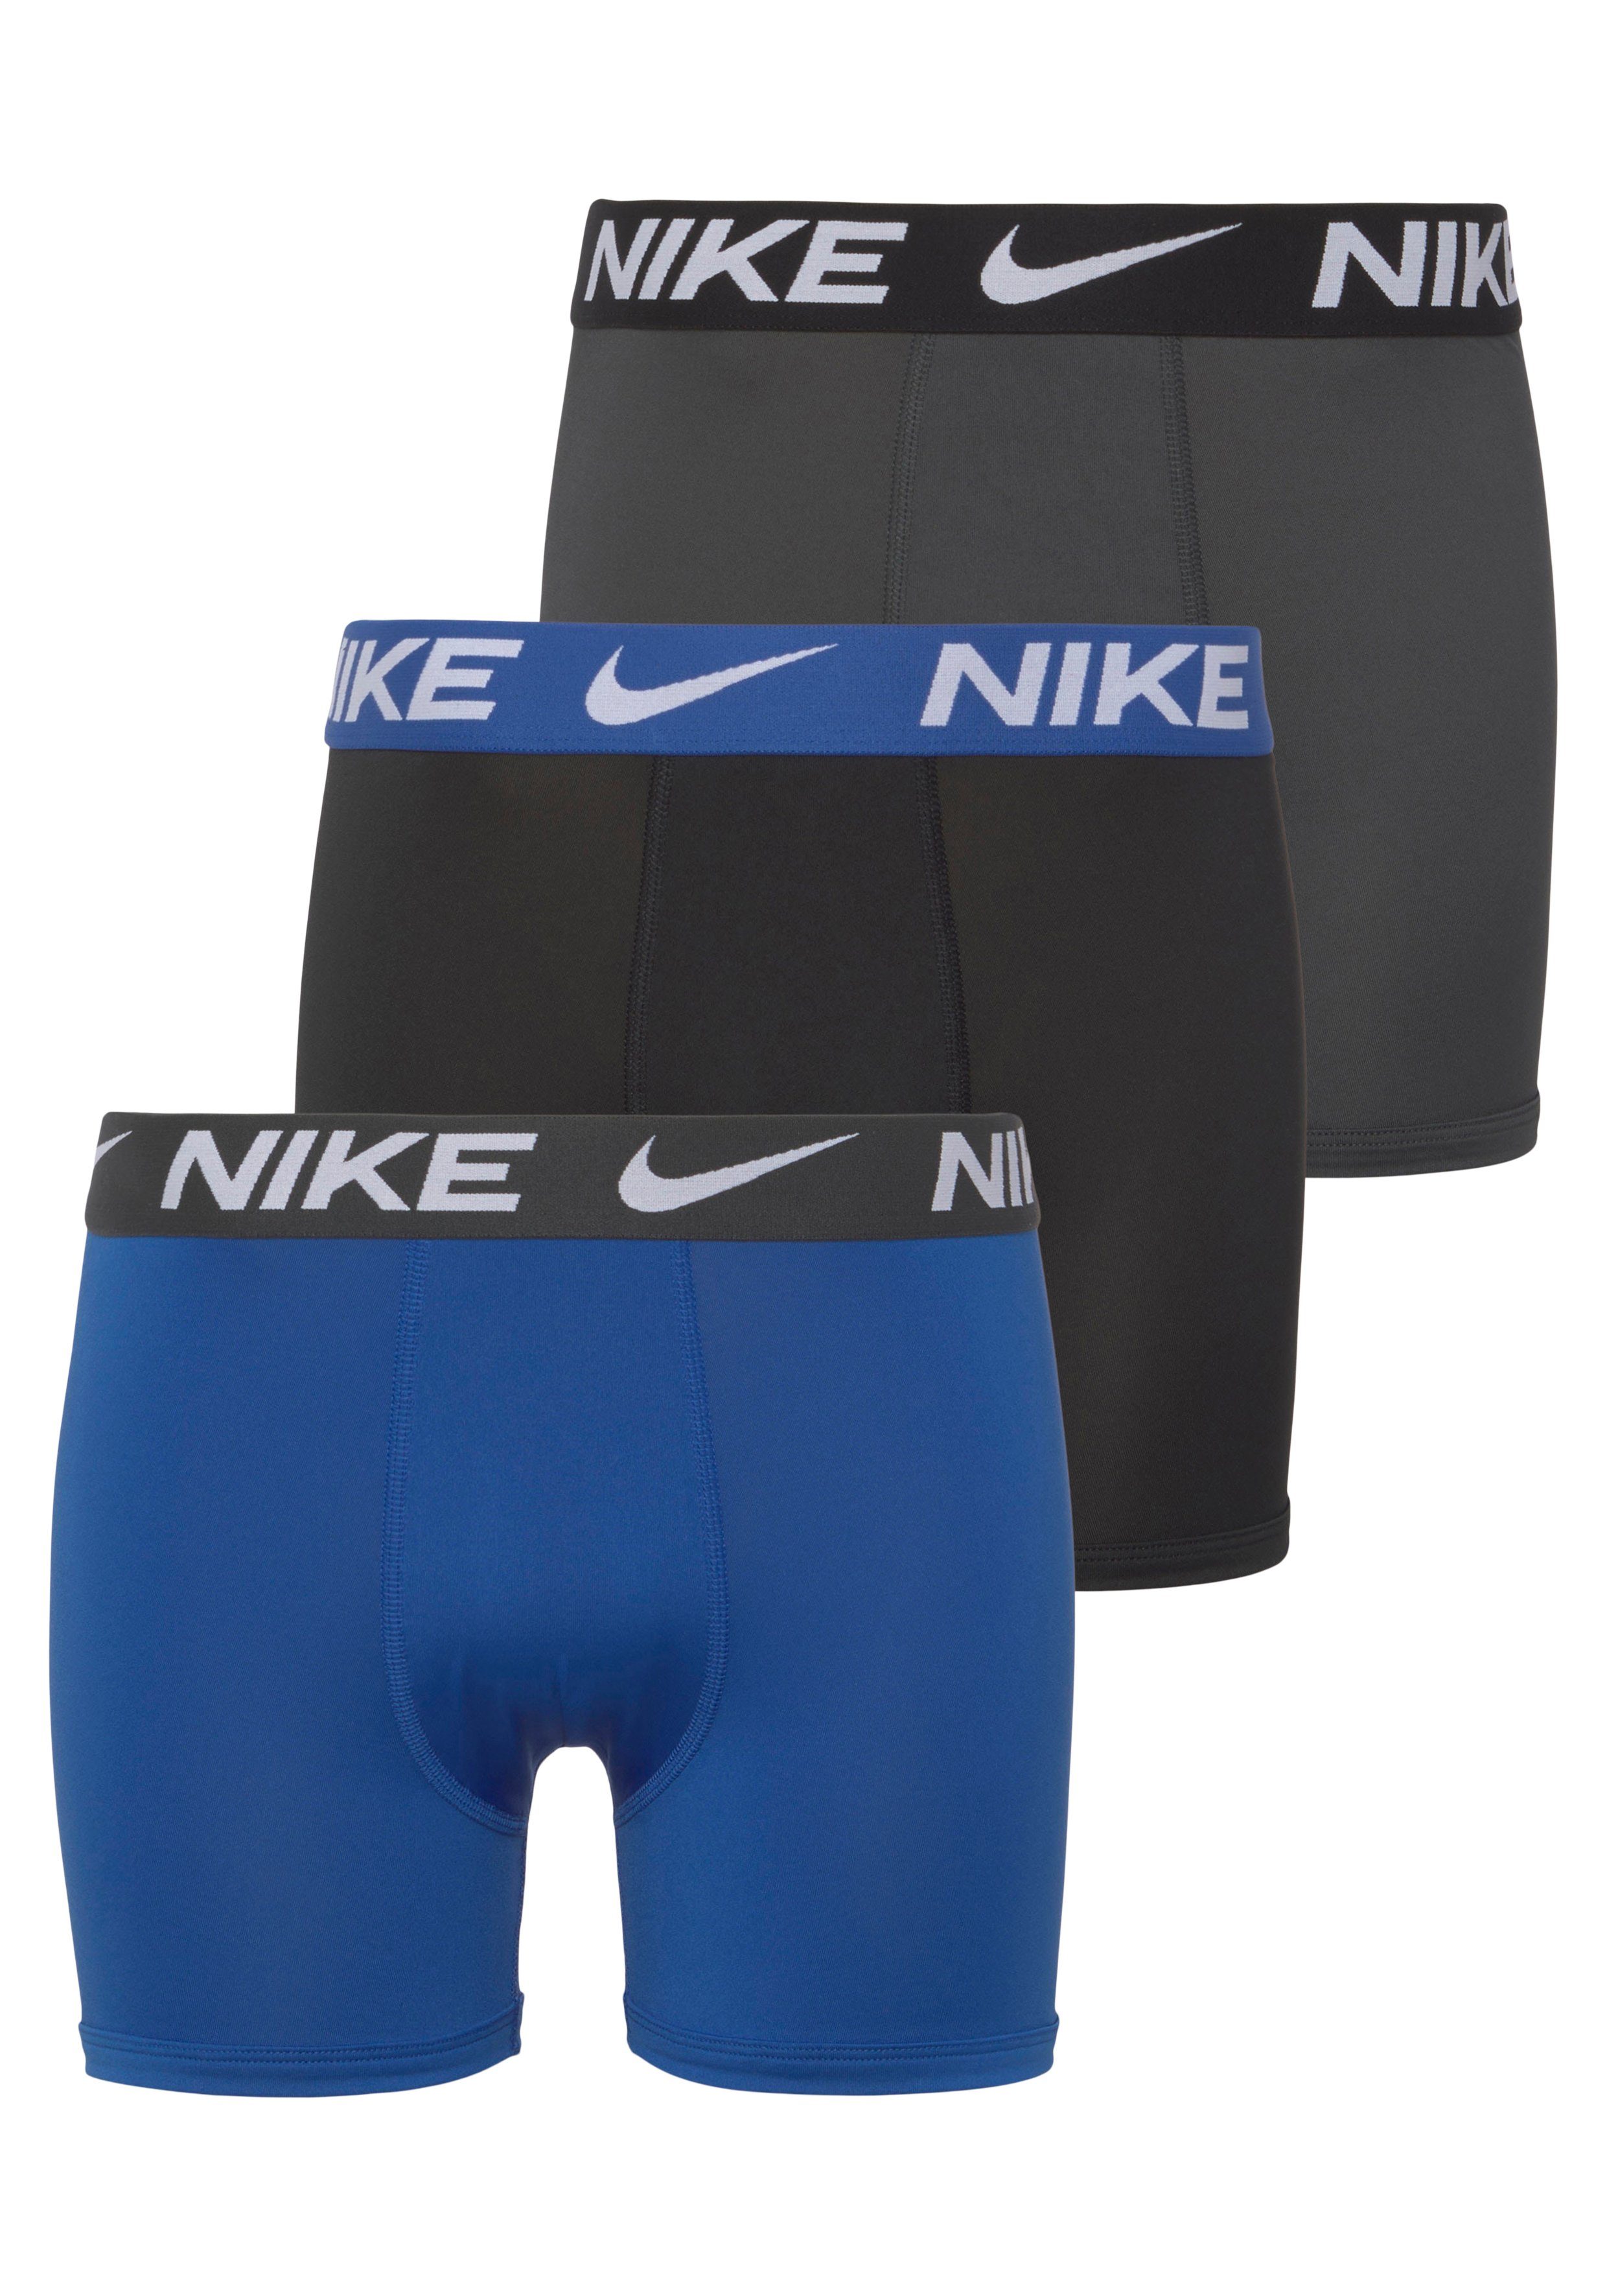 Kinder game für Nike Boxershorts royal Sportswear 3-St) (Packung,